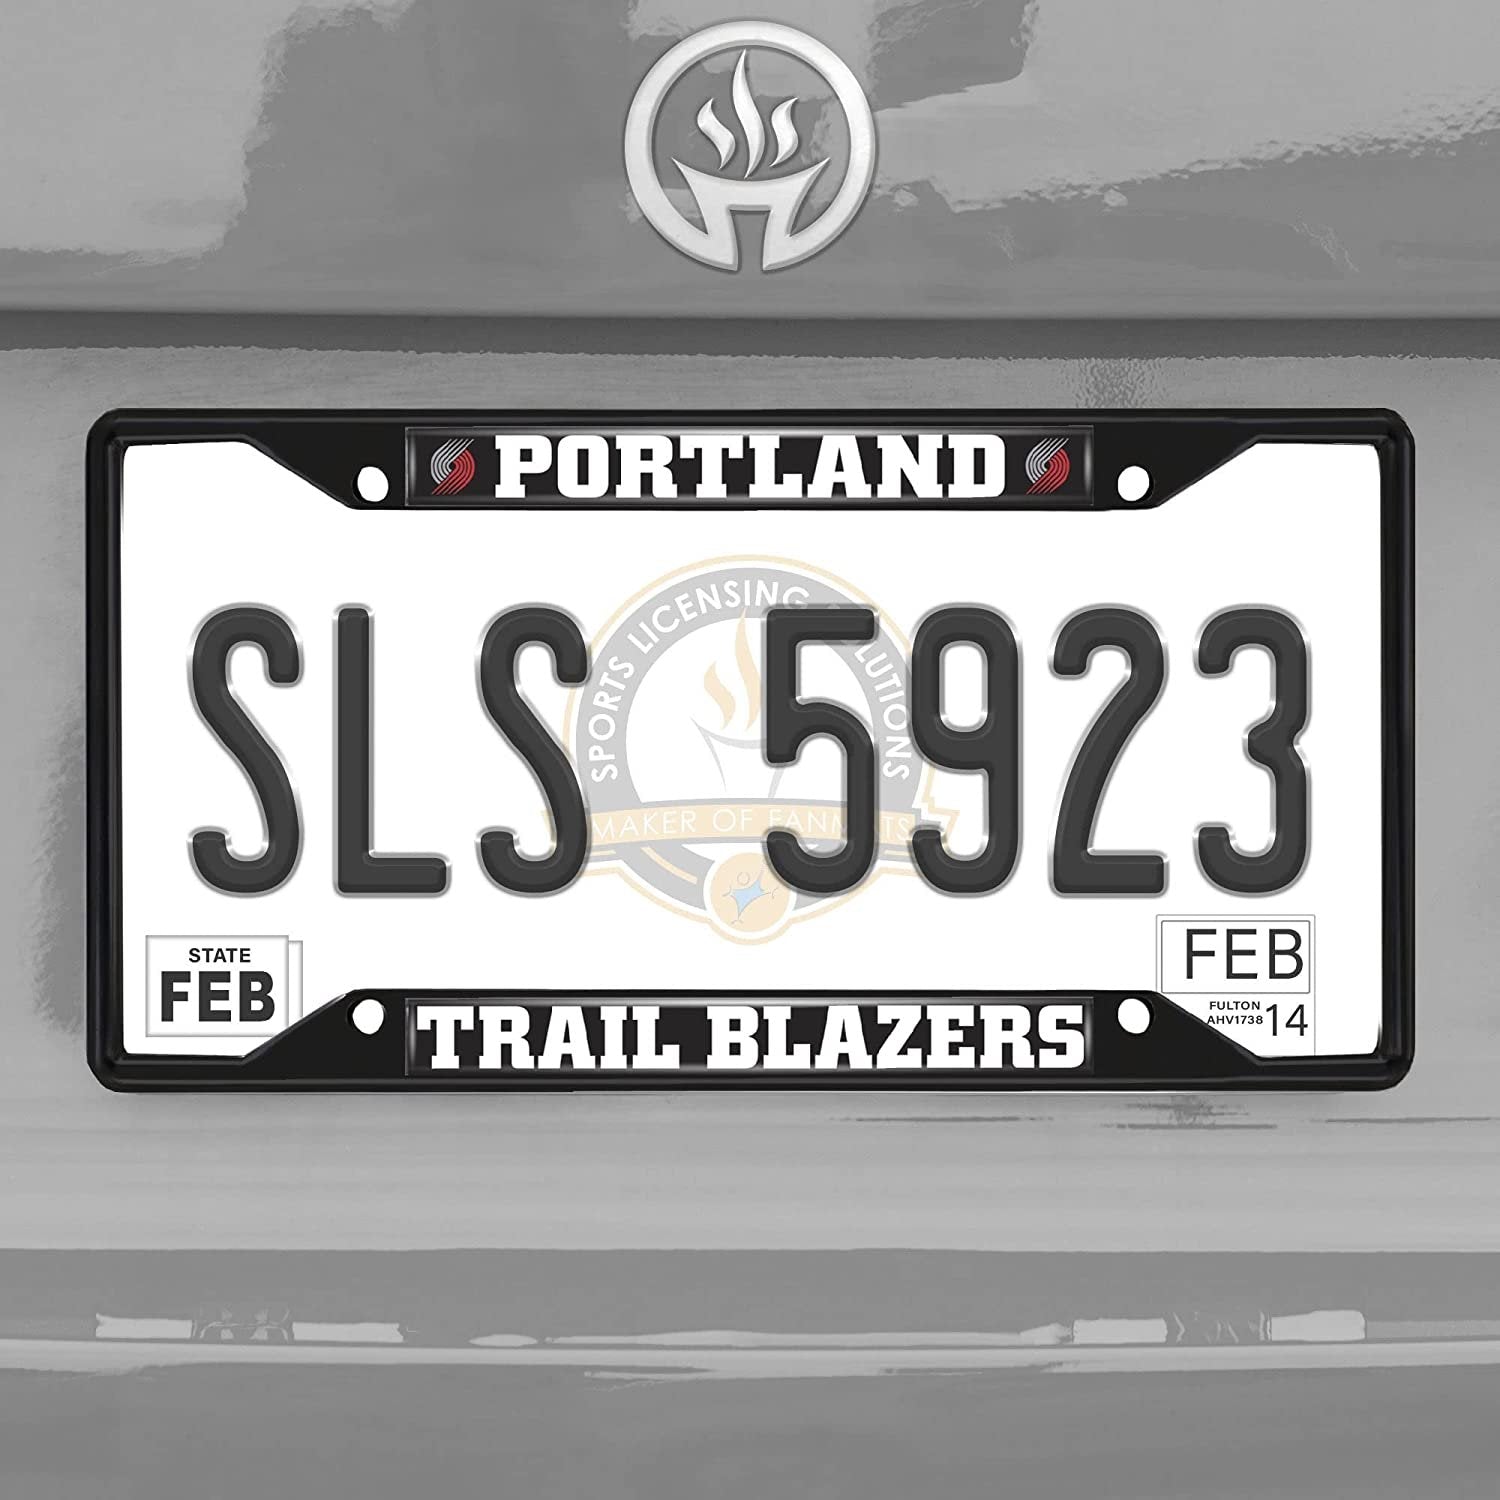 FANMATS 31339 Portland Trail Blazers Metal License Plate Frame Black Finish